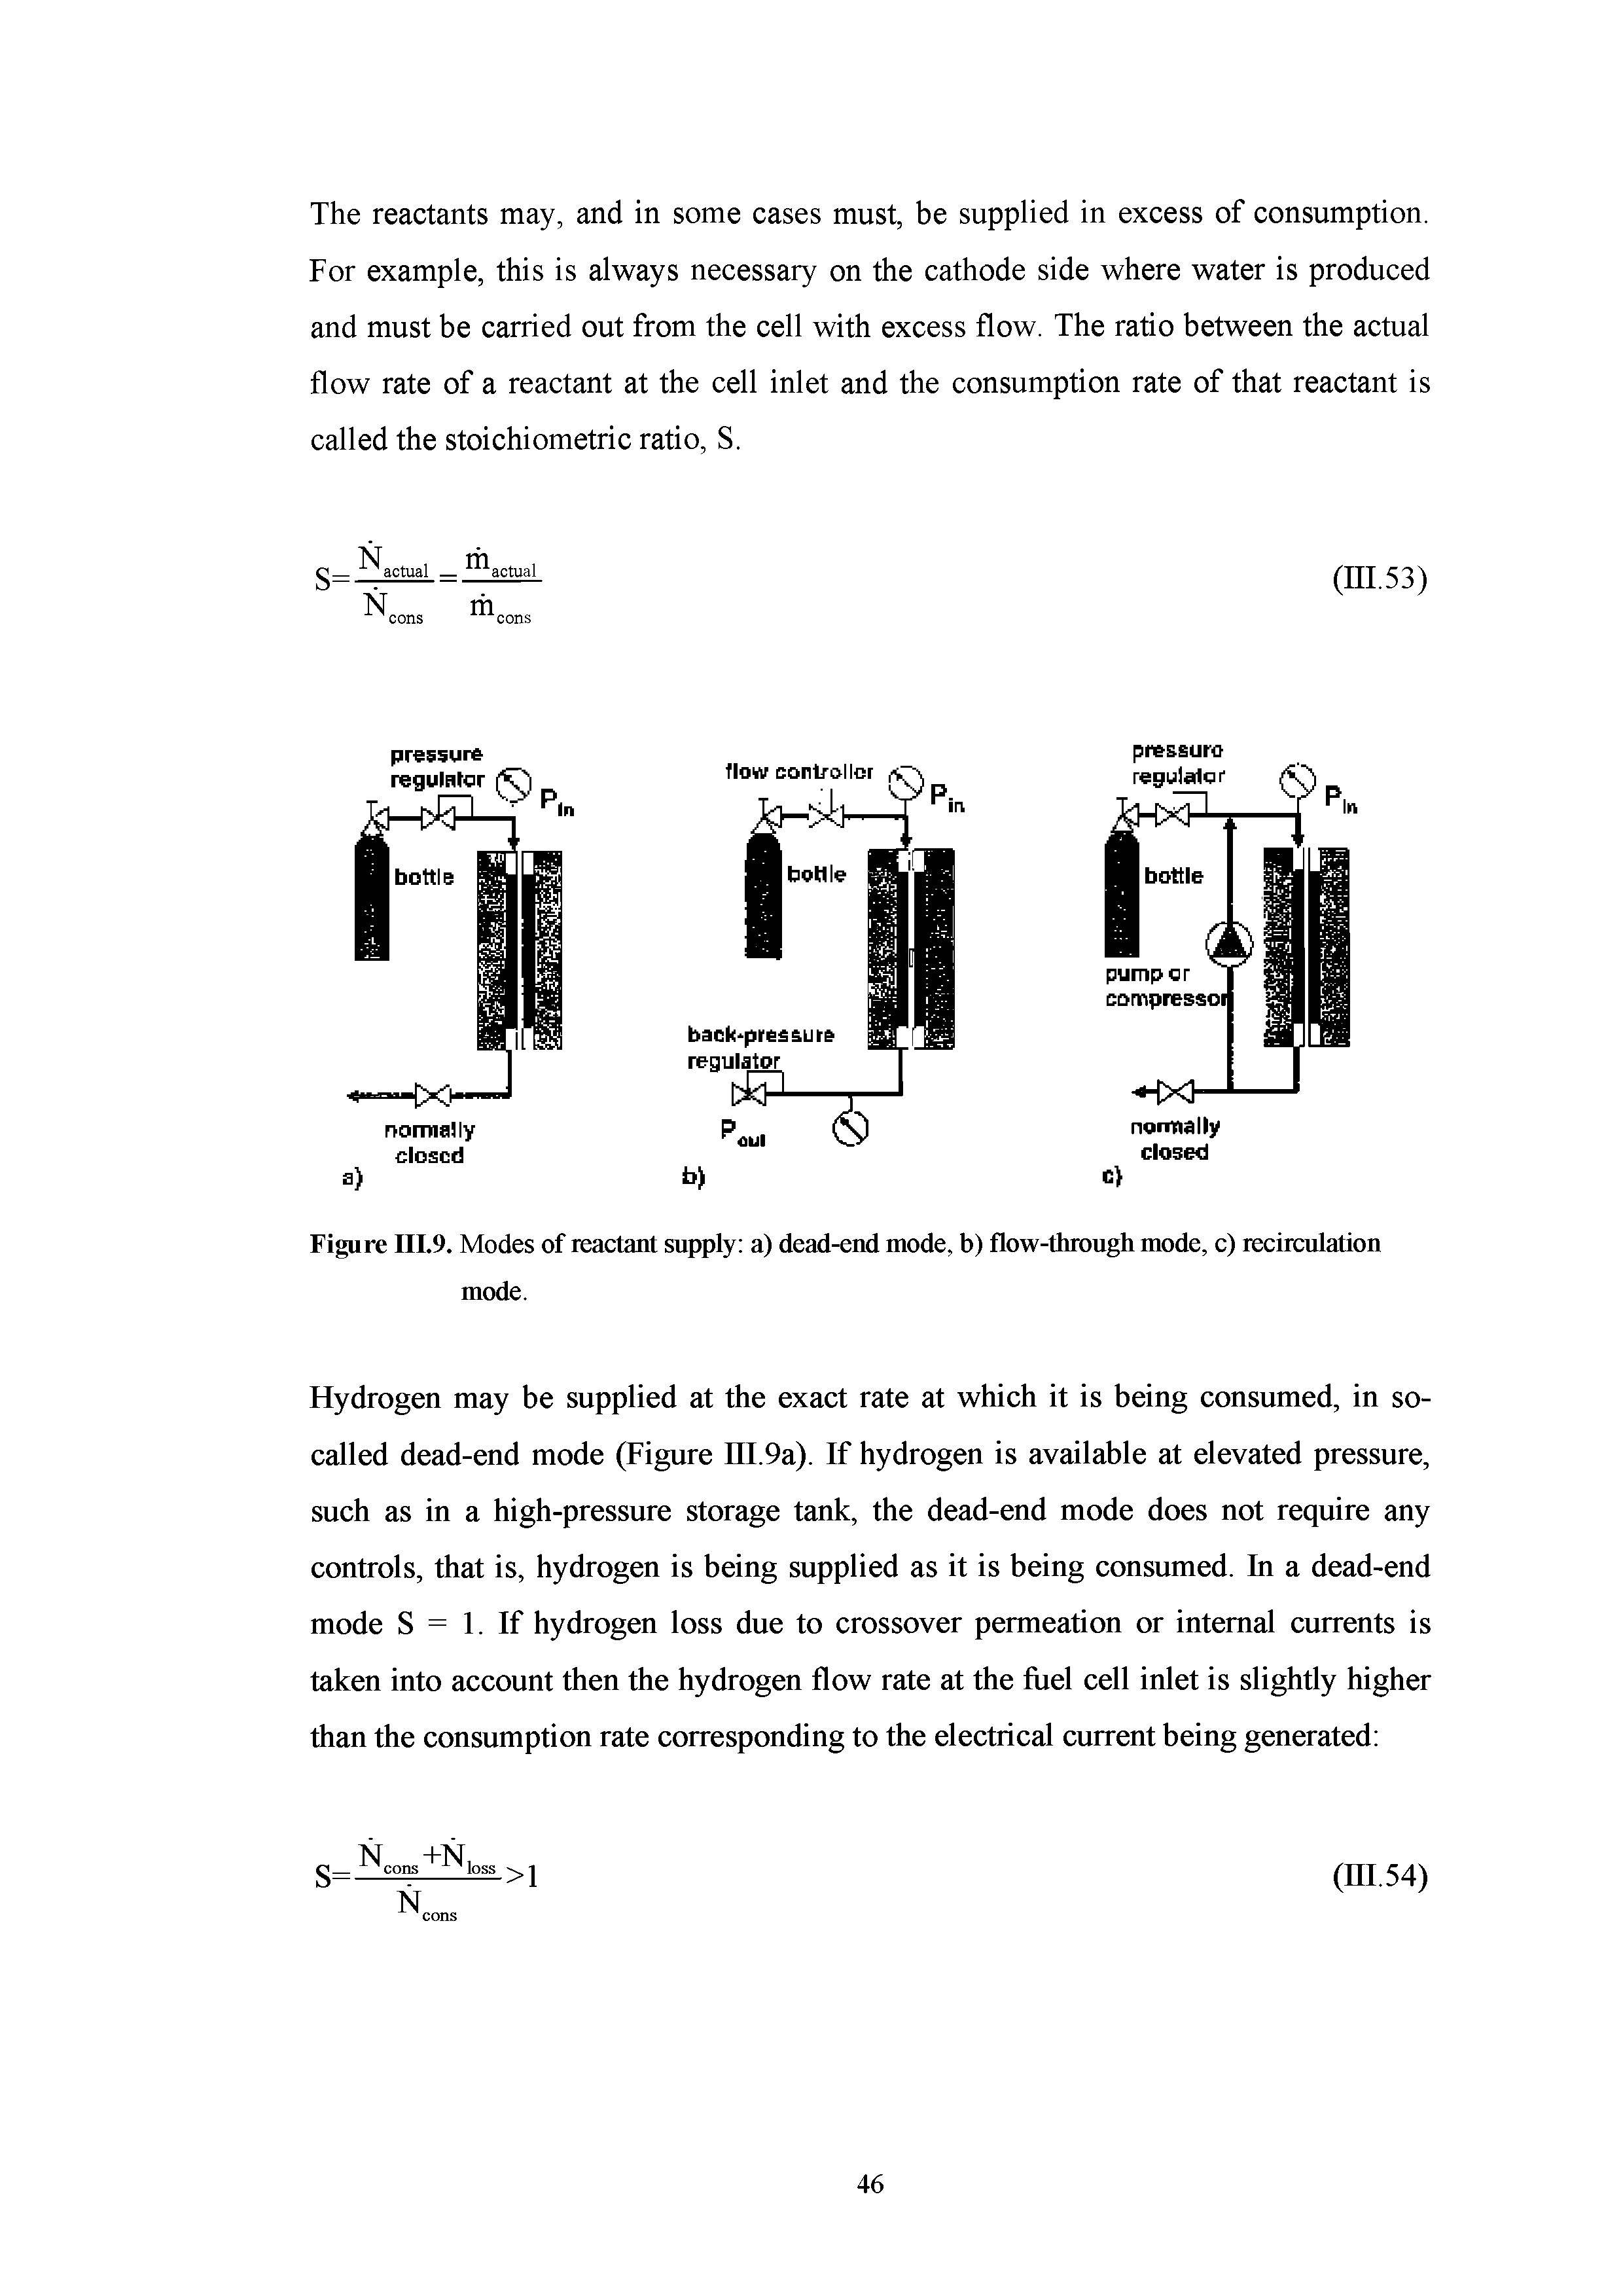 Figure III.9. Modes of reactant supply a) dead-end mode, b) flow-through mode, c) recirculation mode.